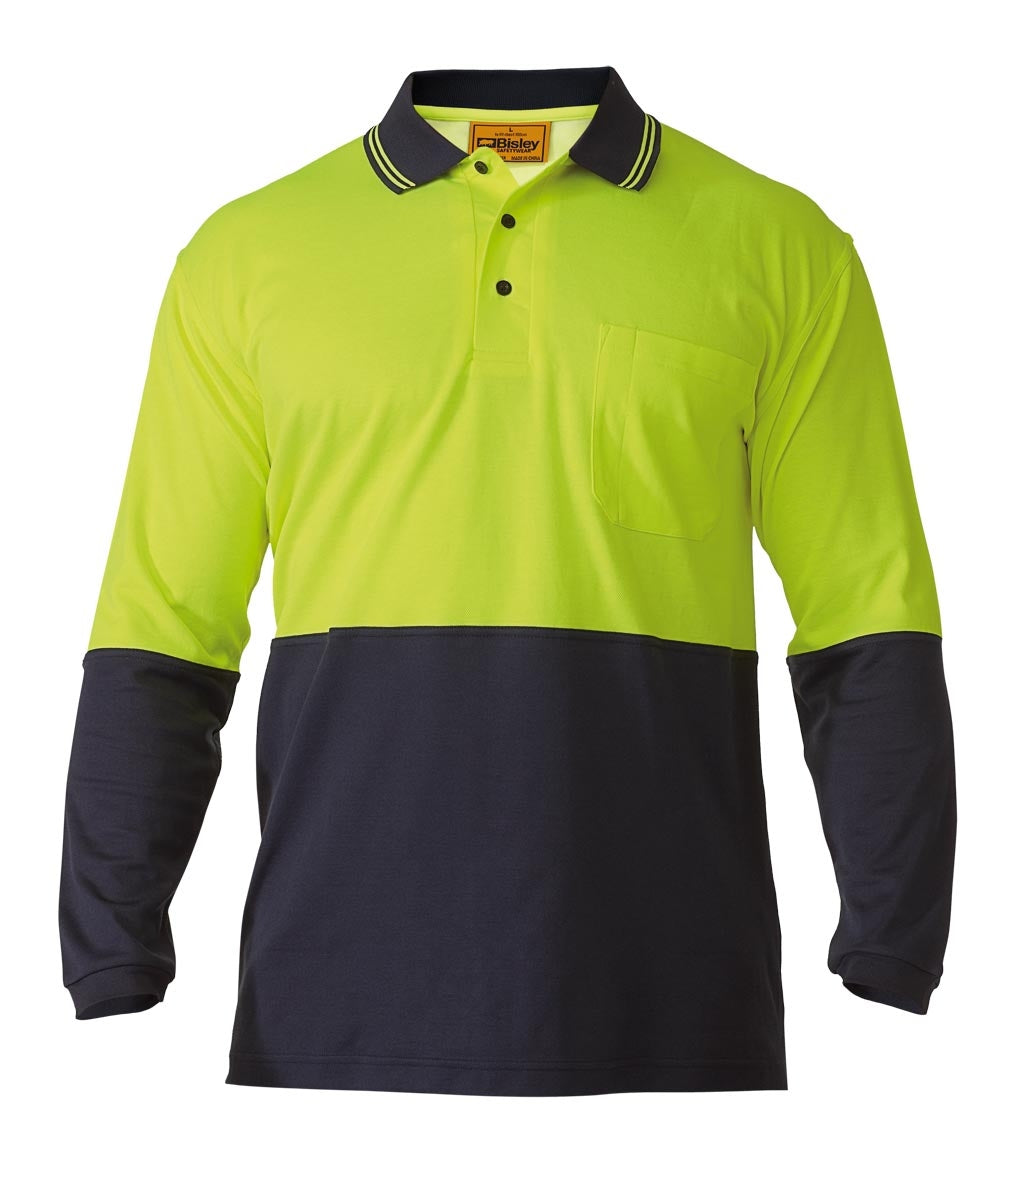 Bisley Polo Shirt - 2 Tone Hi-Vis - Long Sleeve S Yellow/Navy Workwear by Bisley | The Bloke Shop